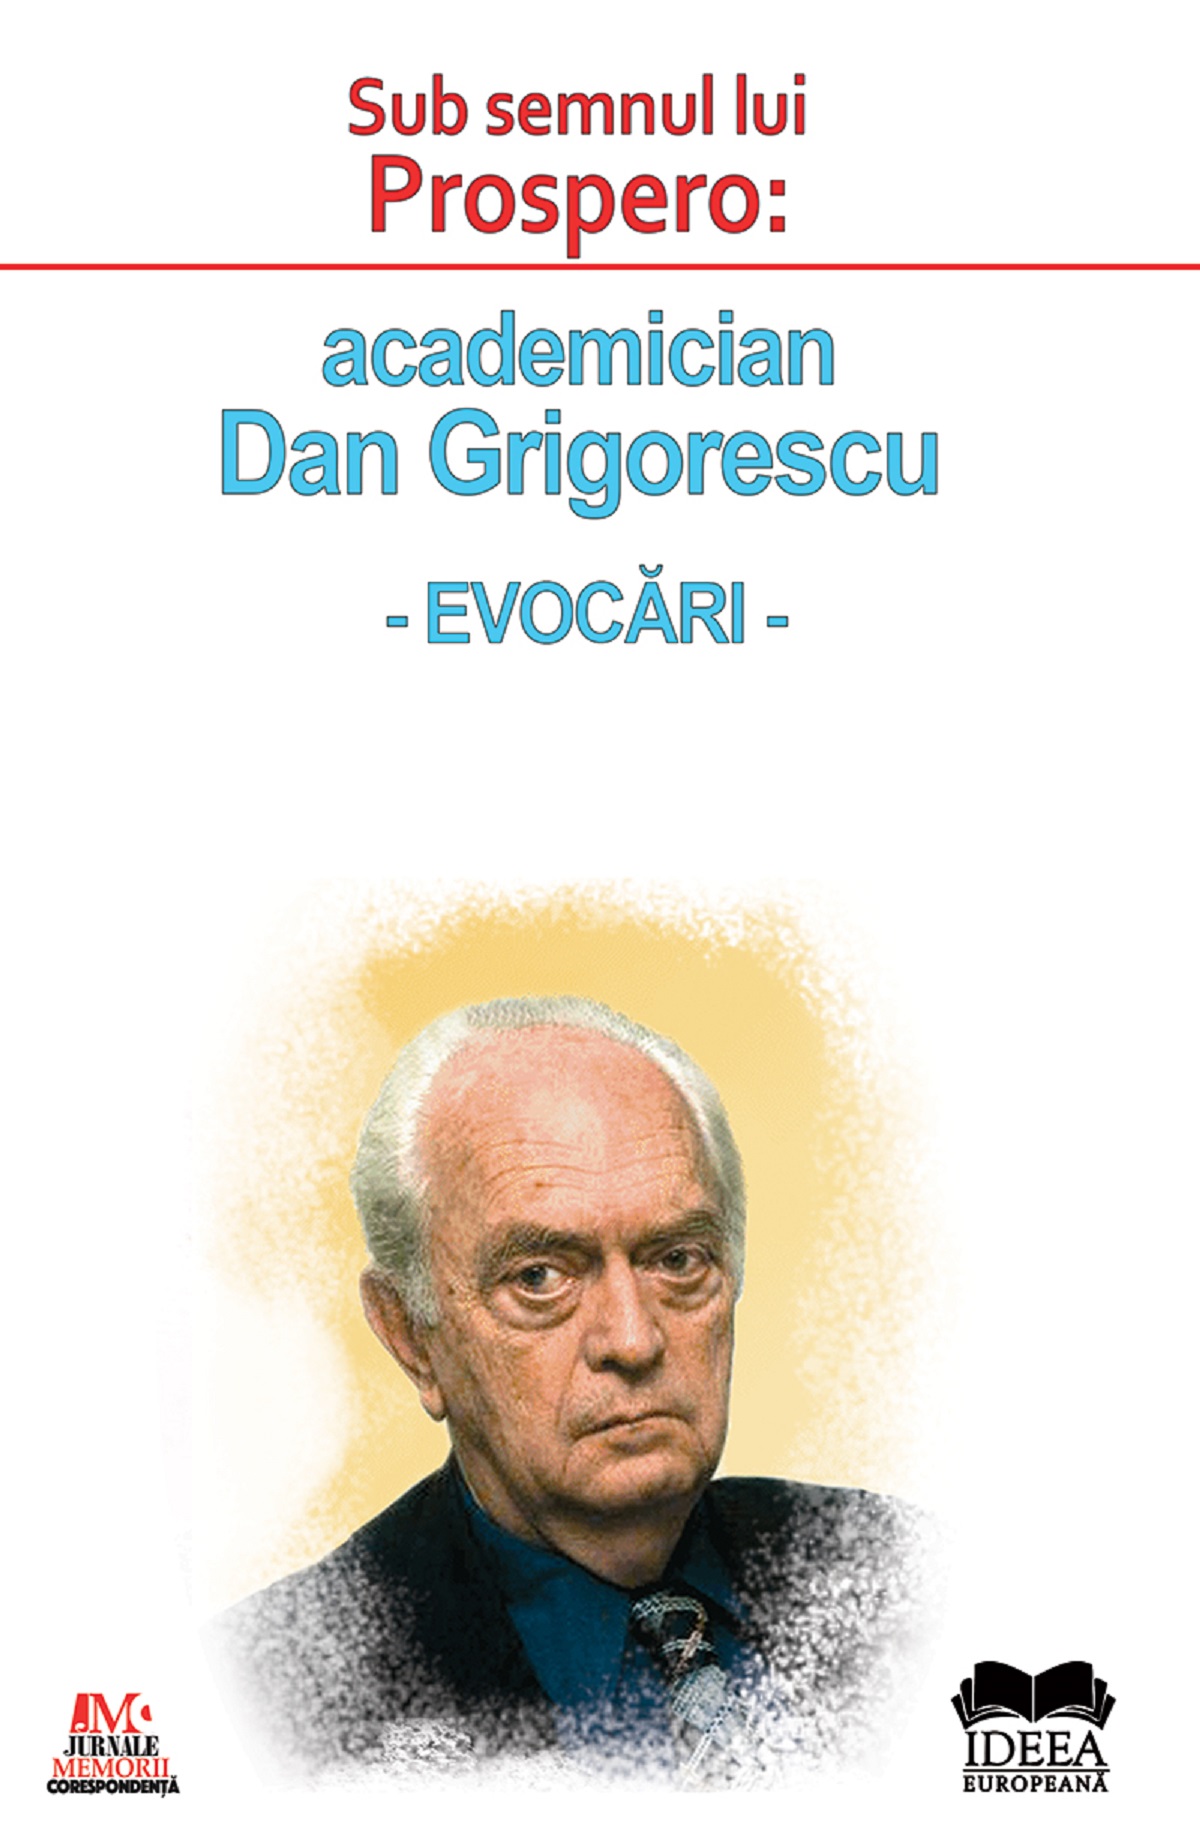 Sub semnul lui Prospero: academician Dan Grigorescu. Evocari